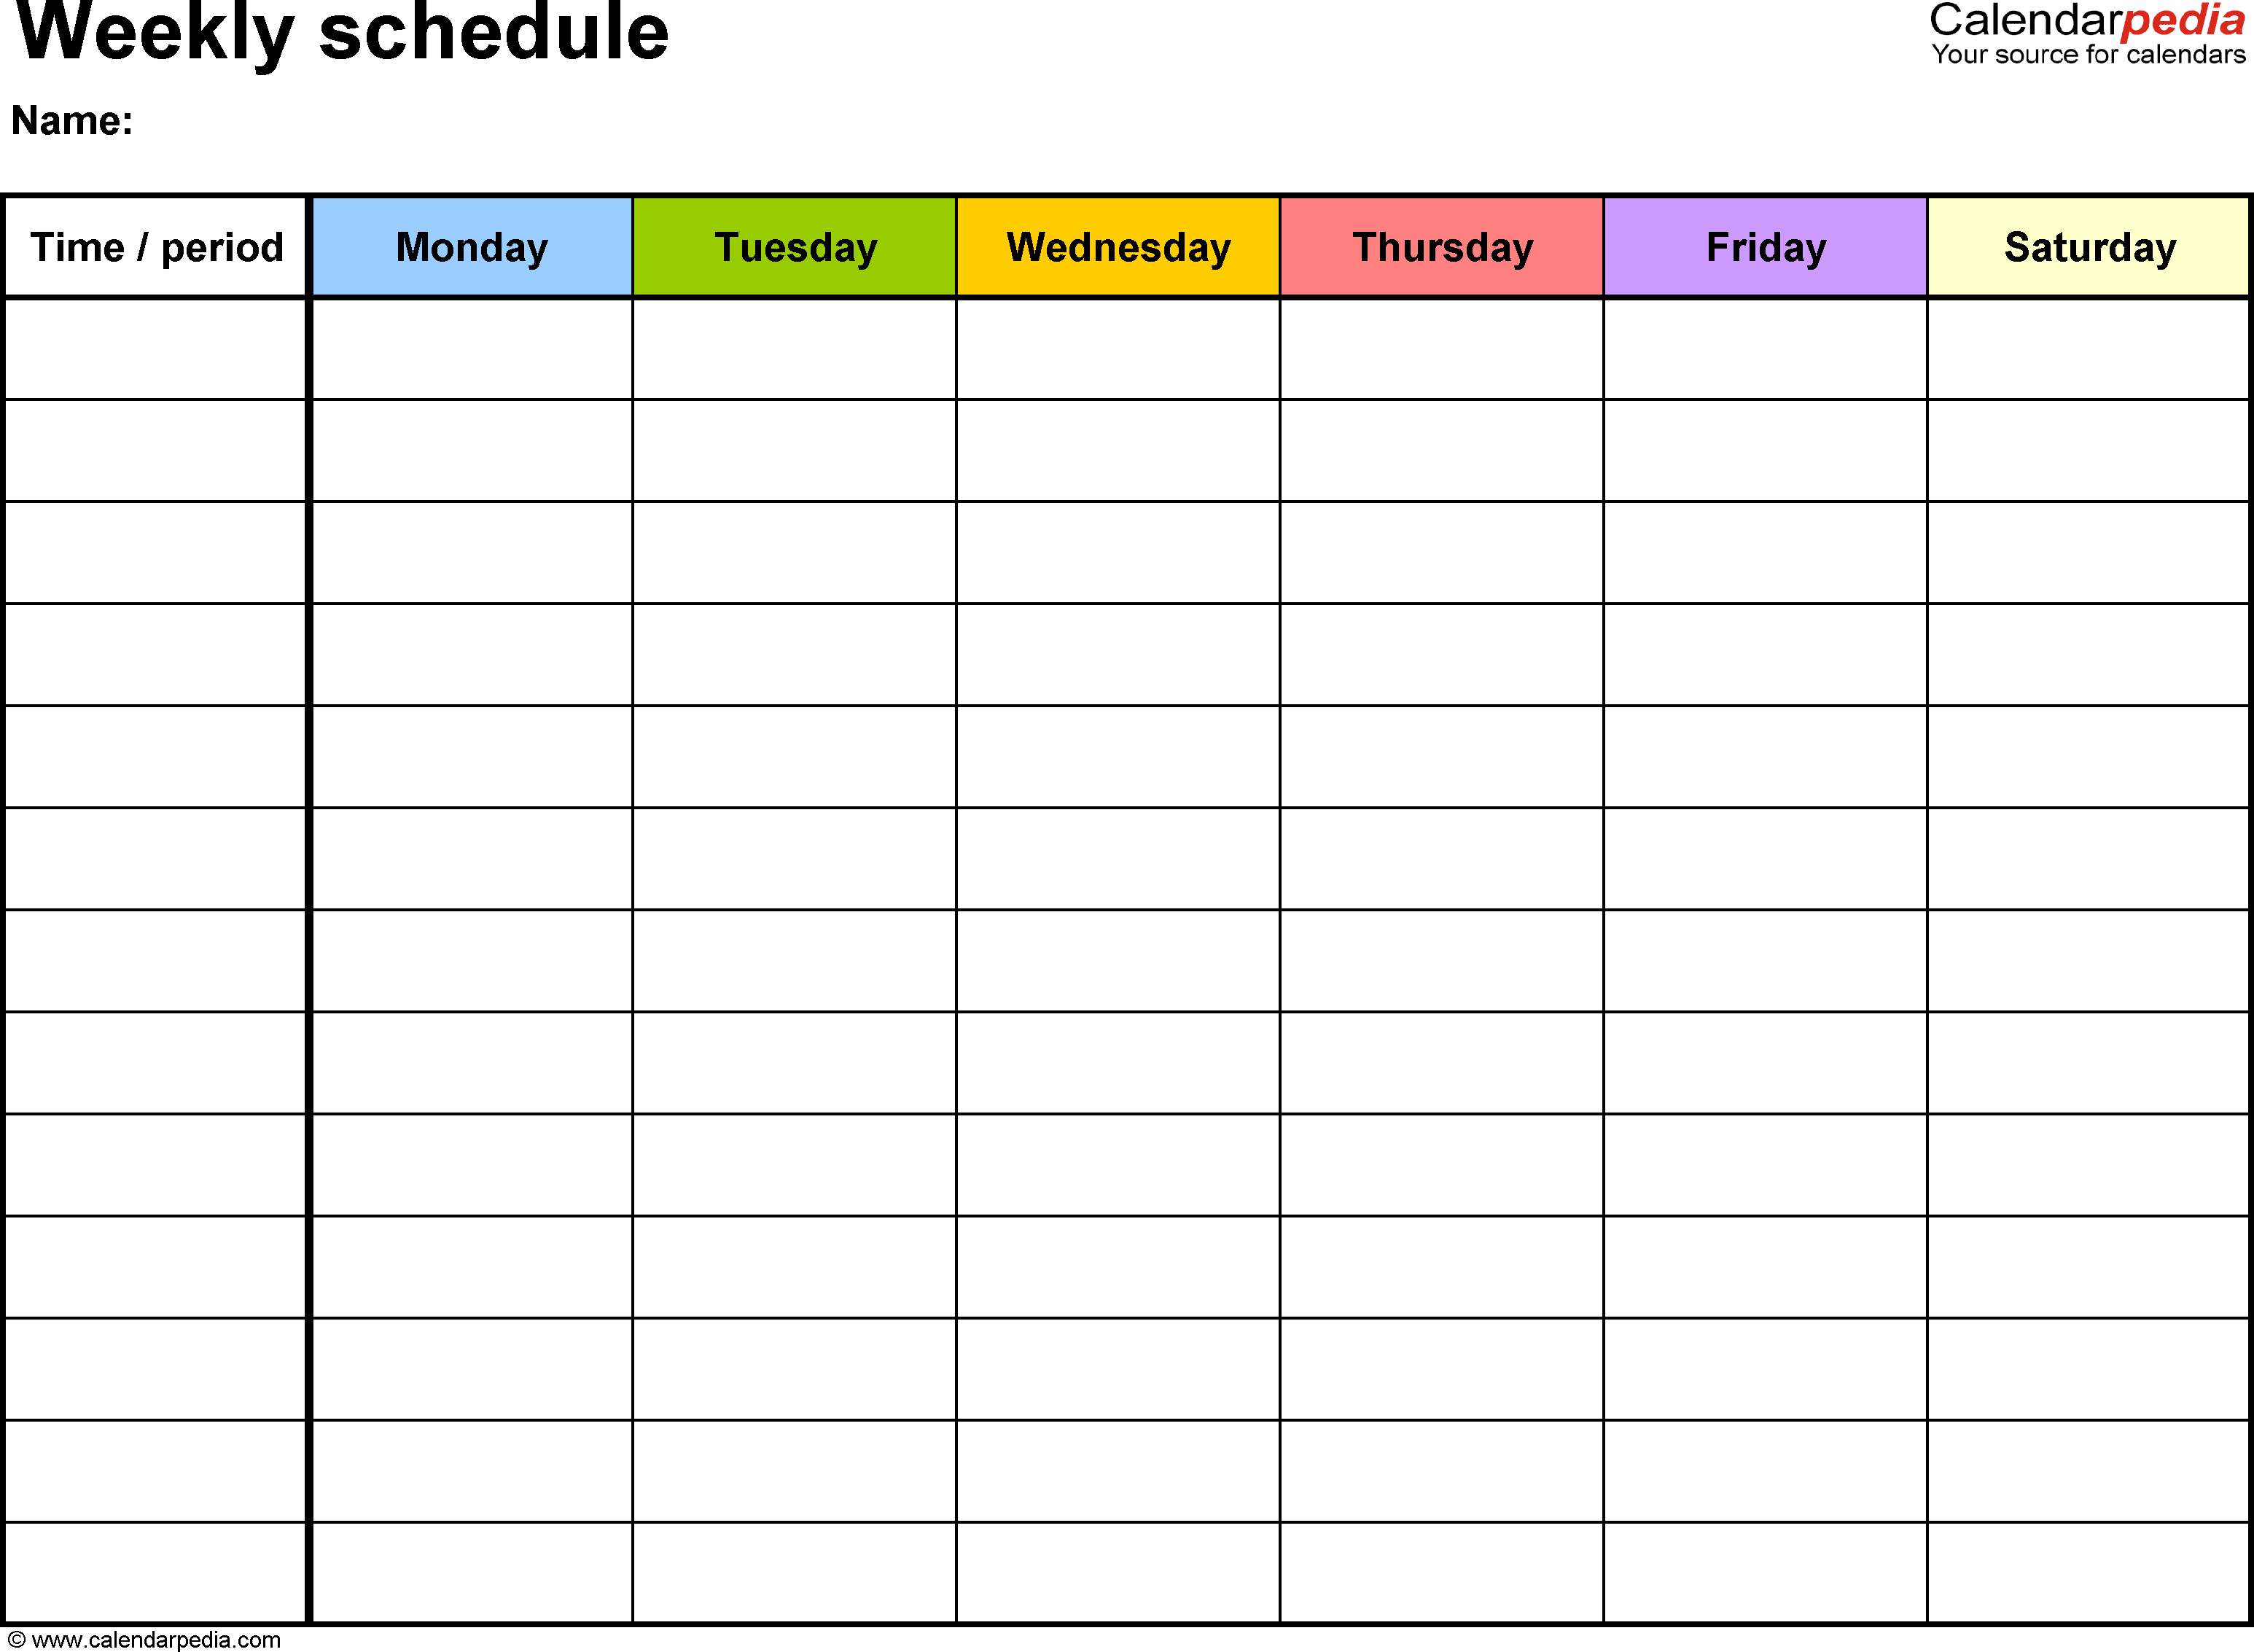 Weekly Schedule Template. Clinical Weekly Activitu Schedule 